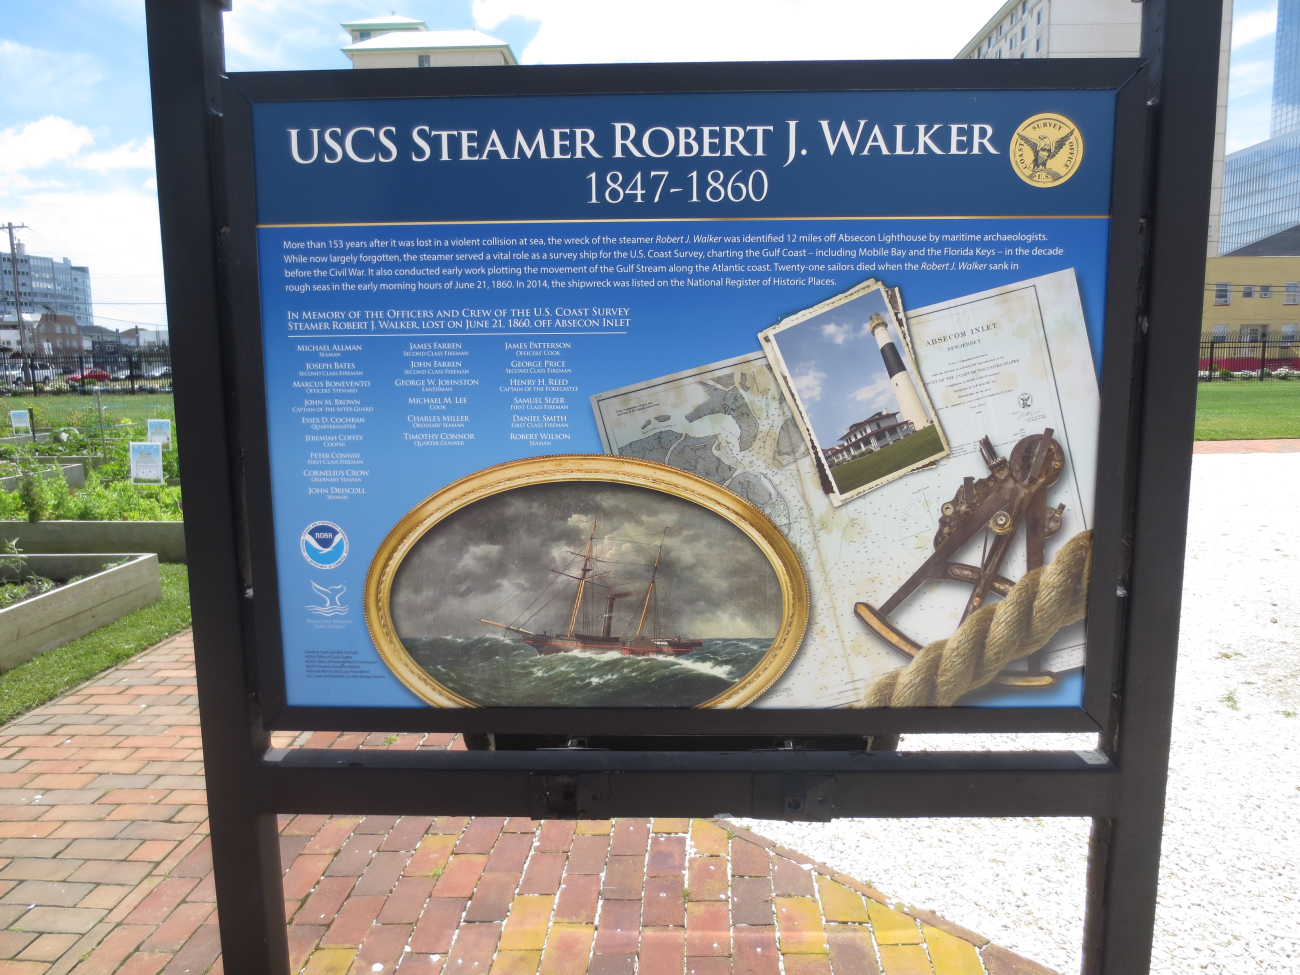 The United States Coast Survey Steamer ROBERT J